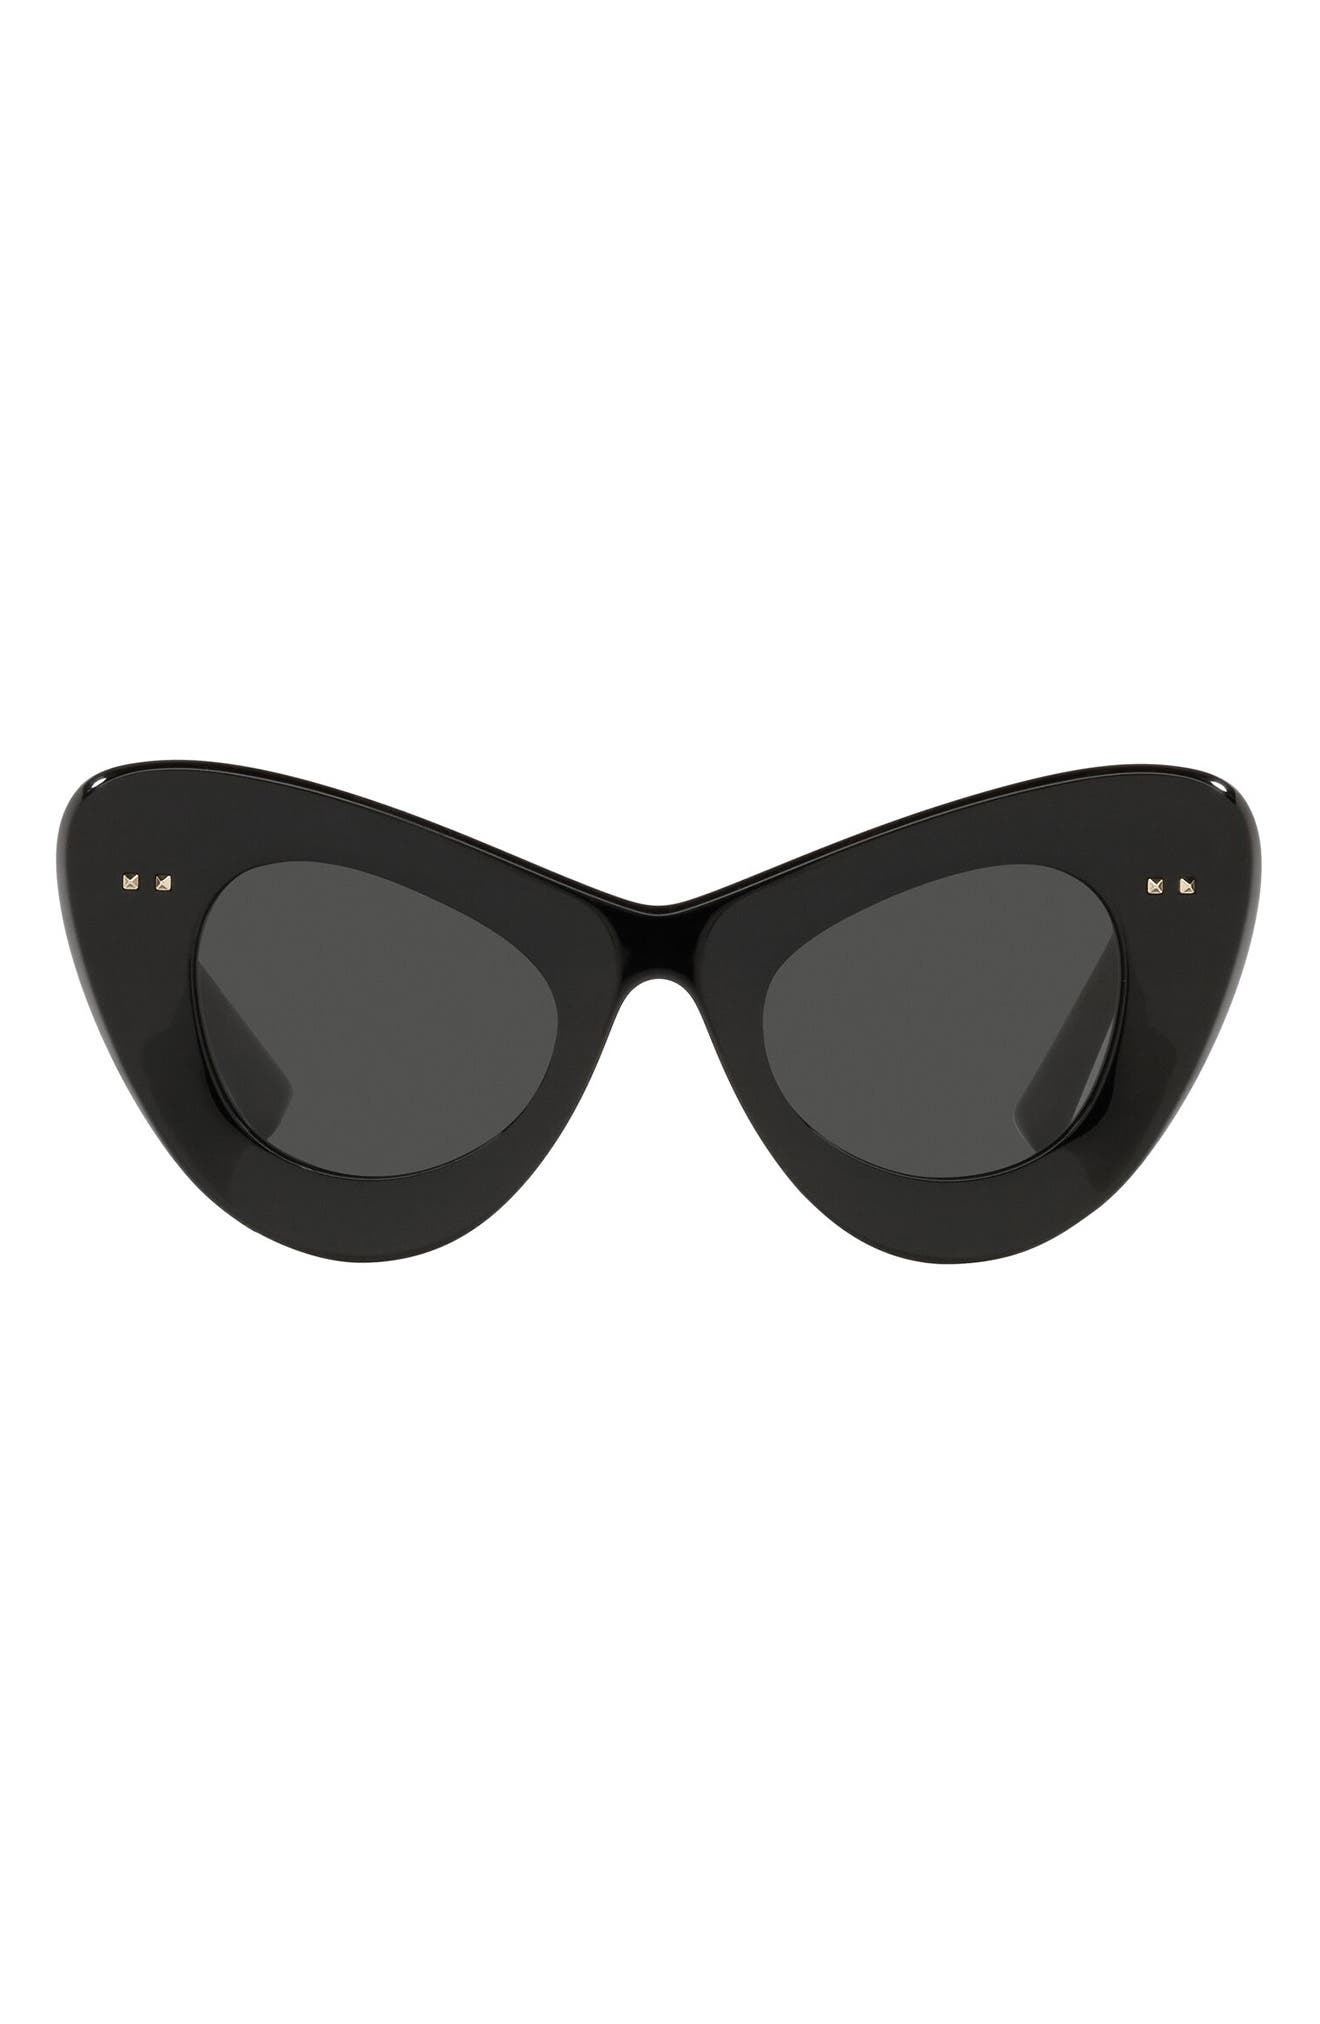 Valentino 46mm Cat Eye Sunglasses in Black at Nordstrom